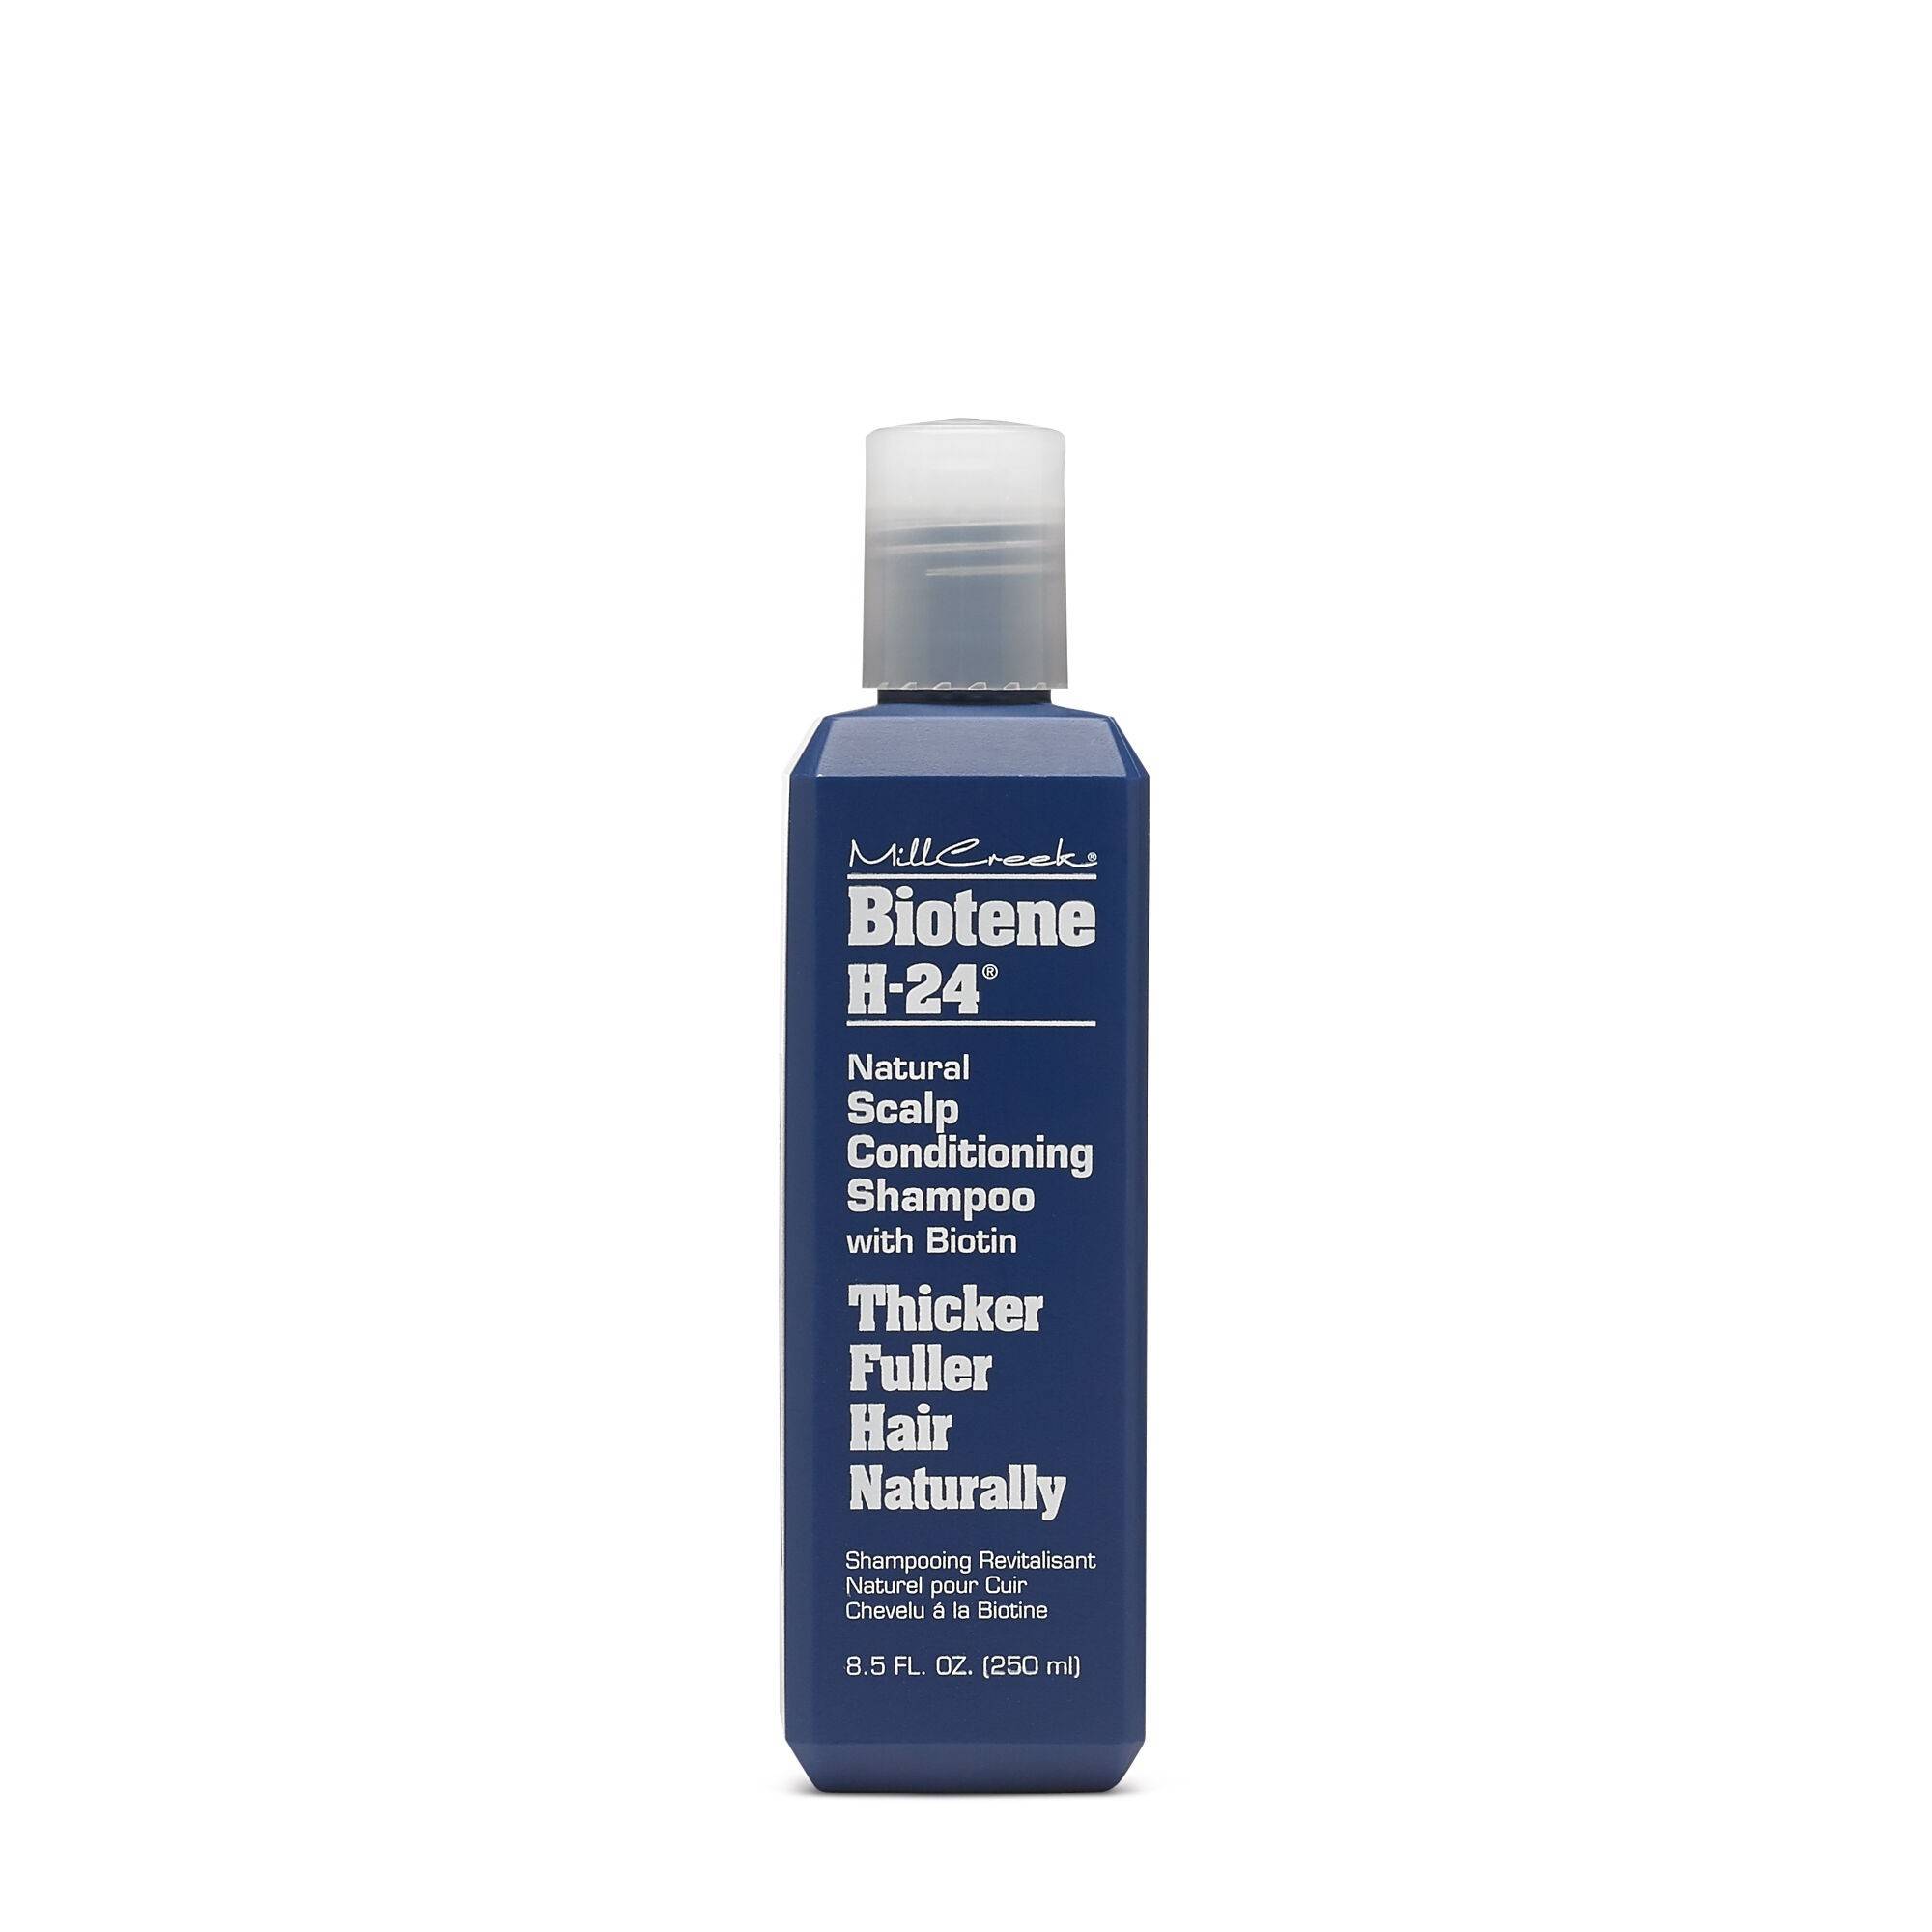 Mill creek botanicals biotene h-24 scalp conditioning shampoo with biotin, sampon-balsam natural cu biotina, 250ml - gnc